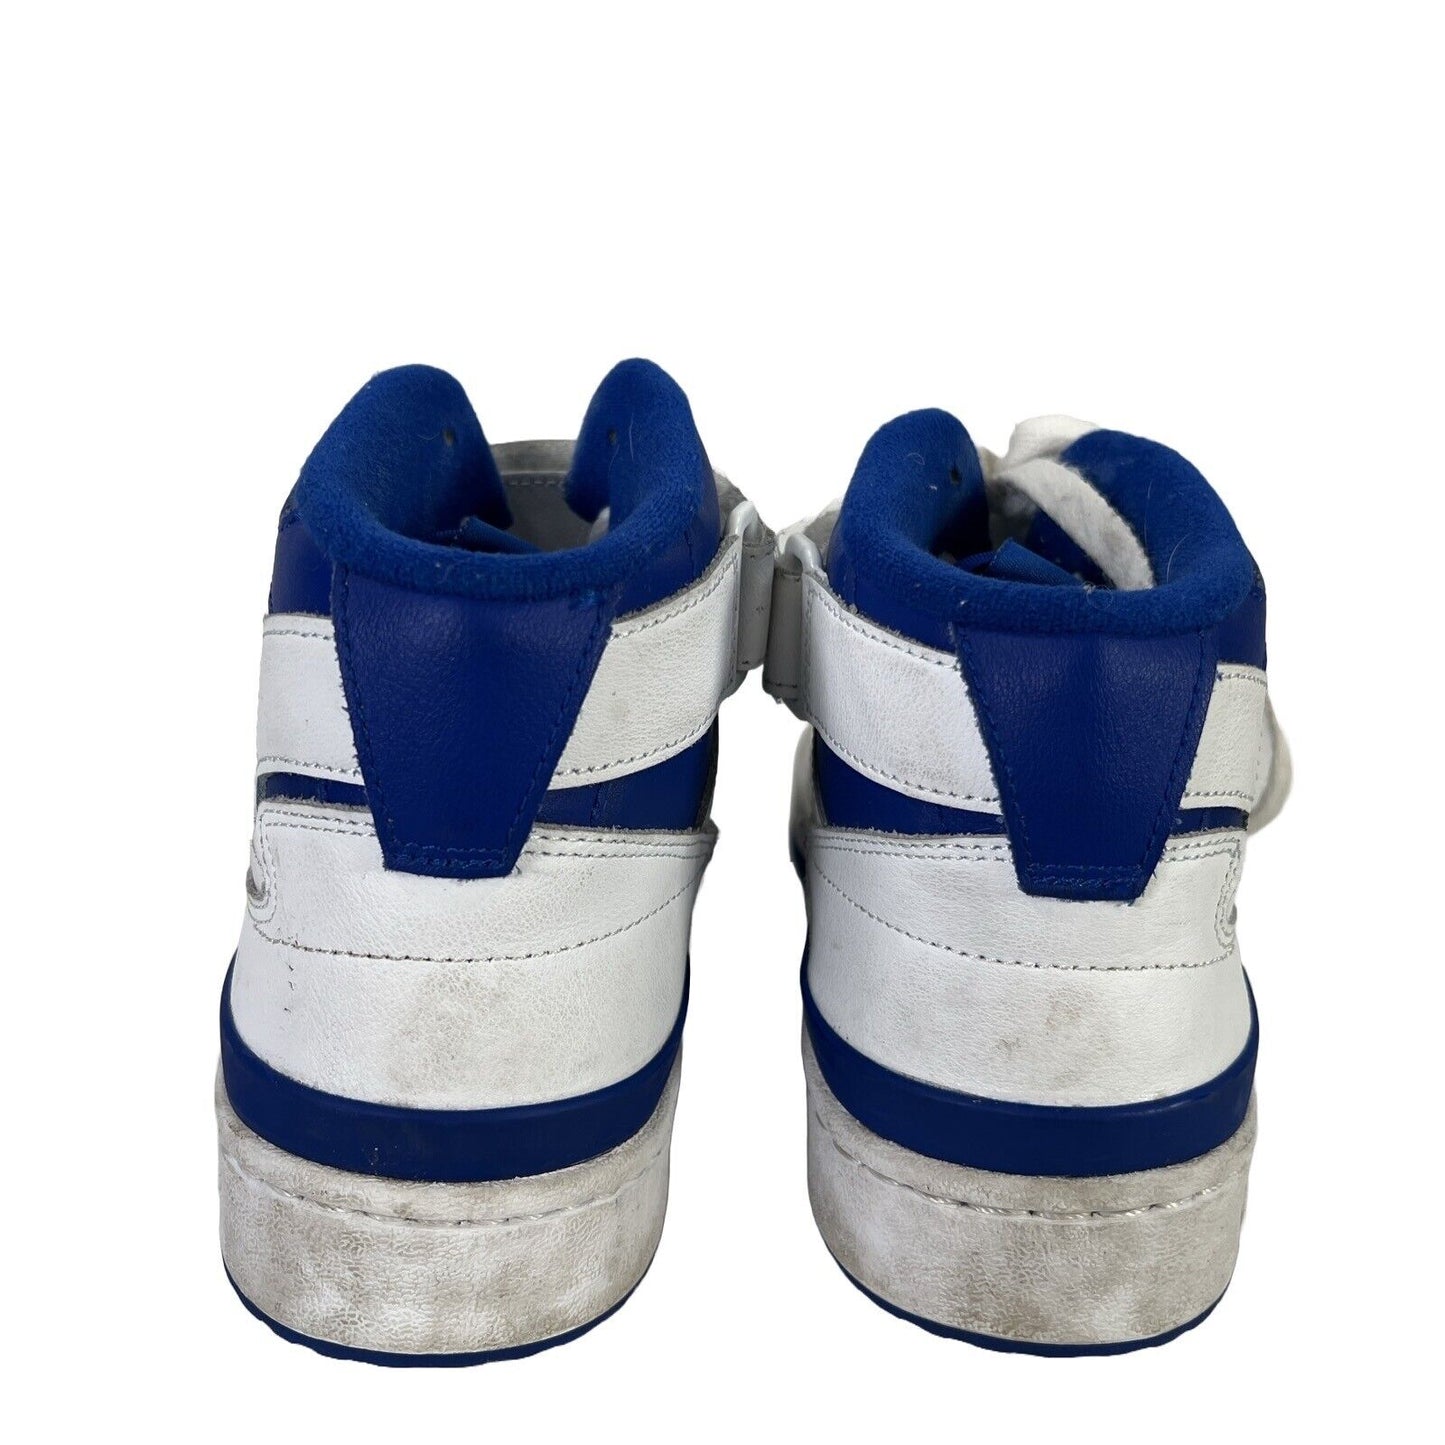 Adidas Men's White/Blue Postmove Mid Top Sneakers - 8